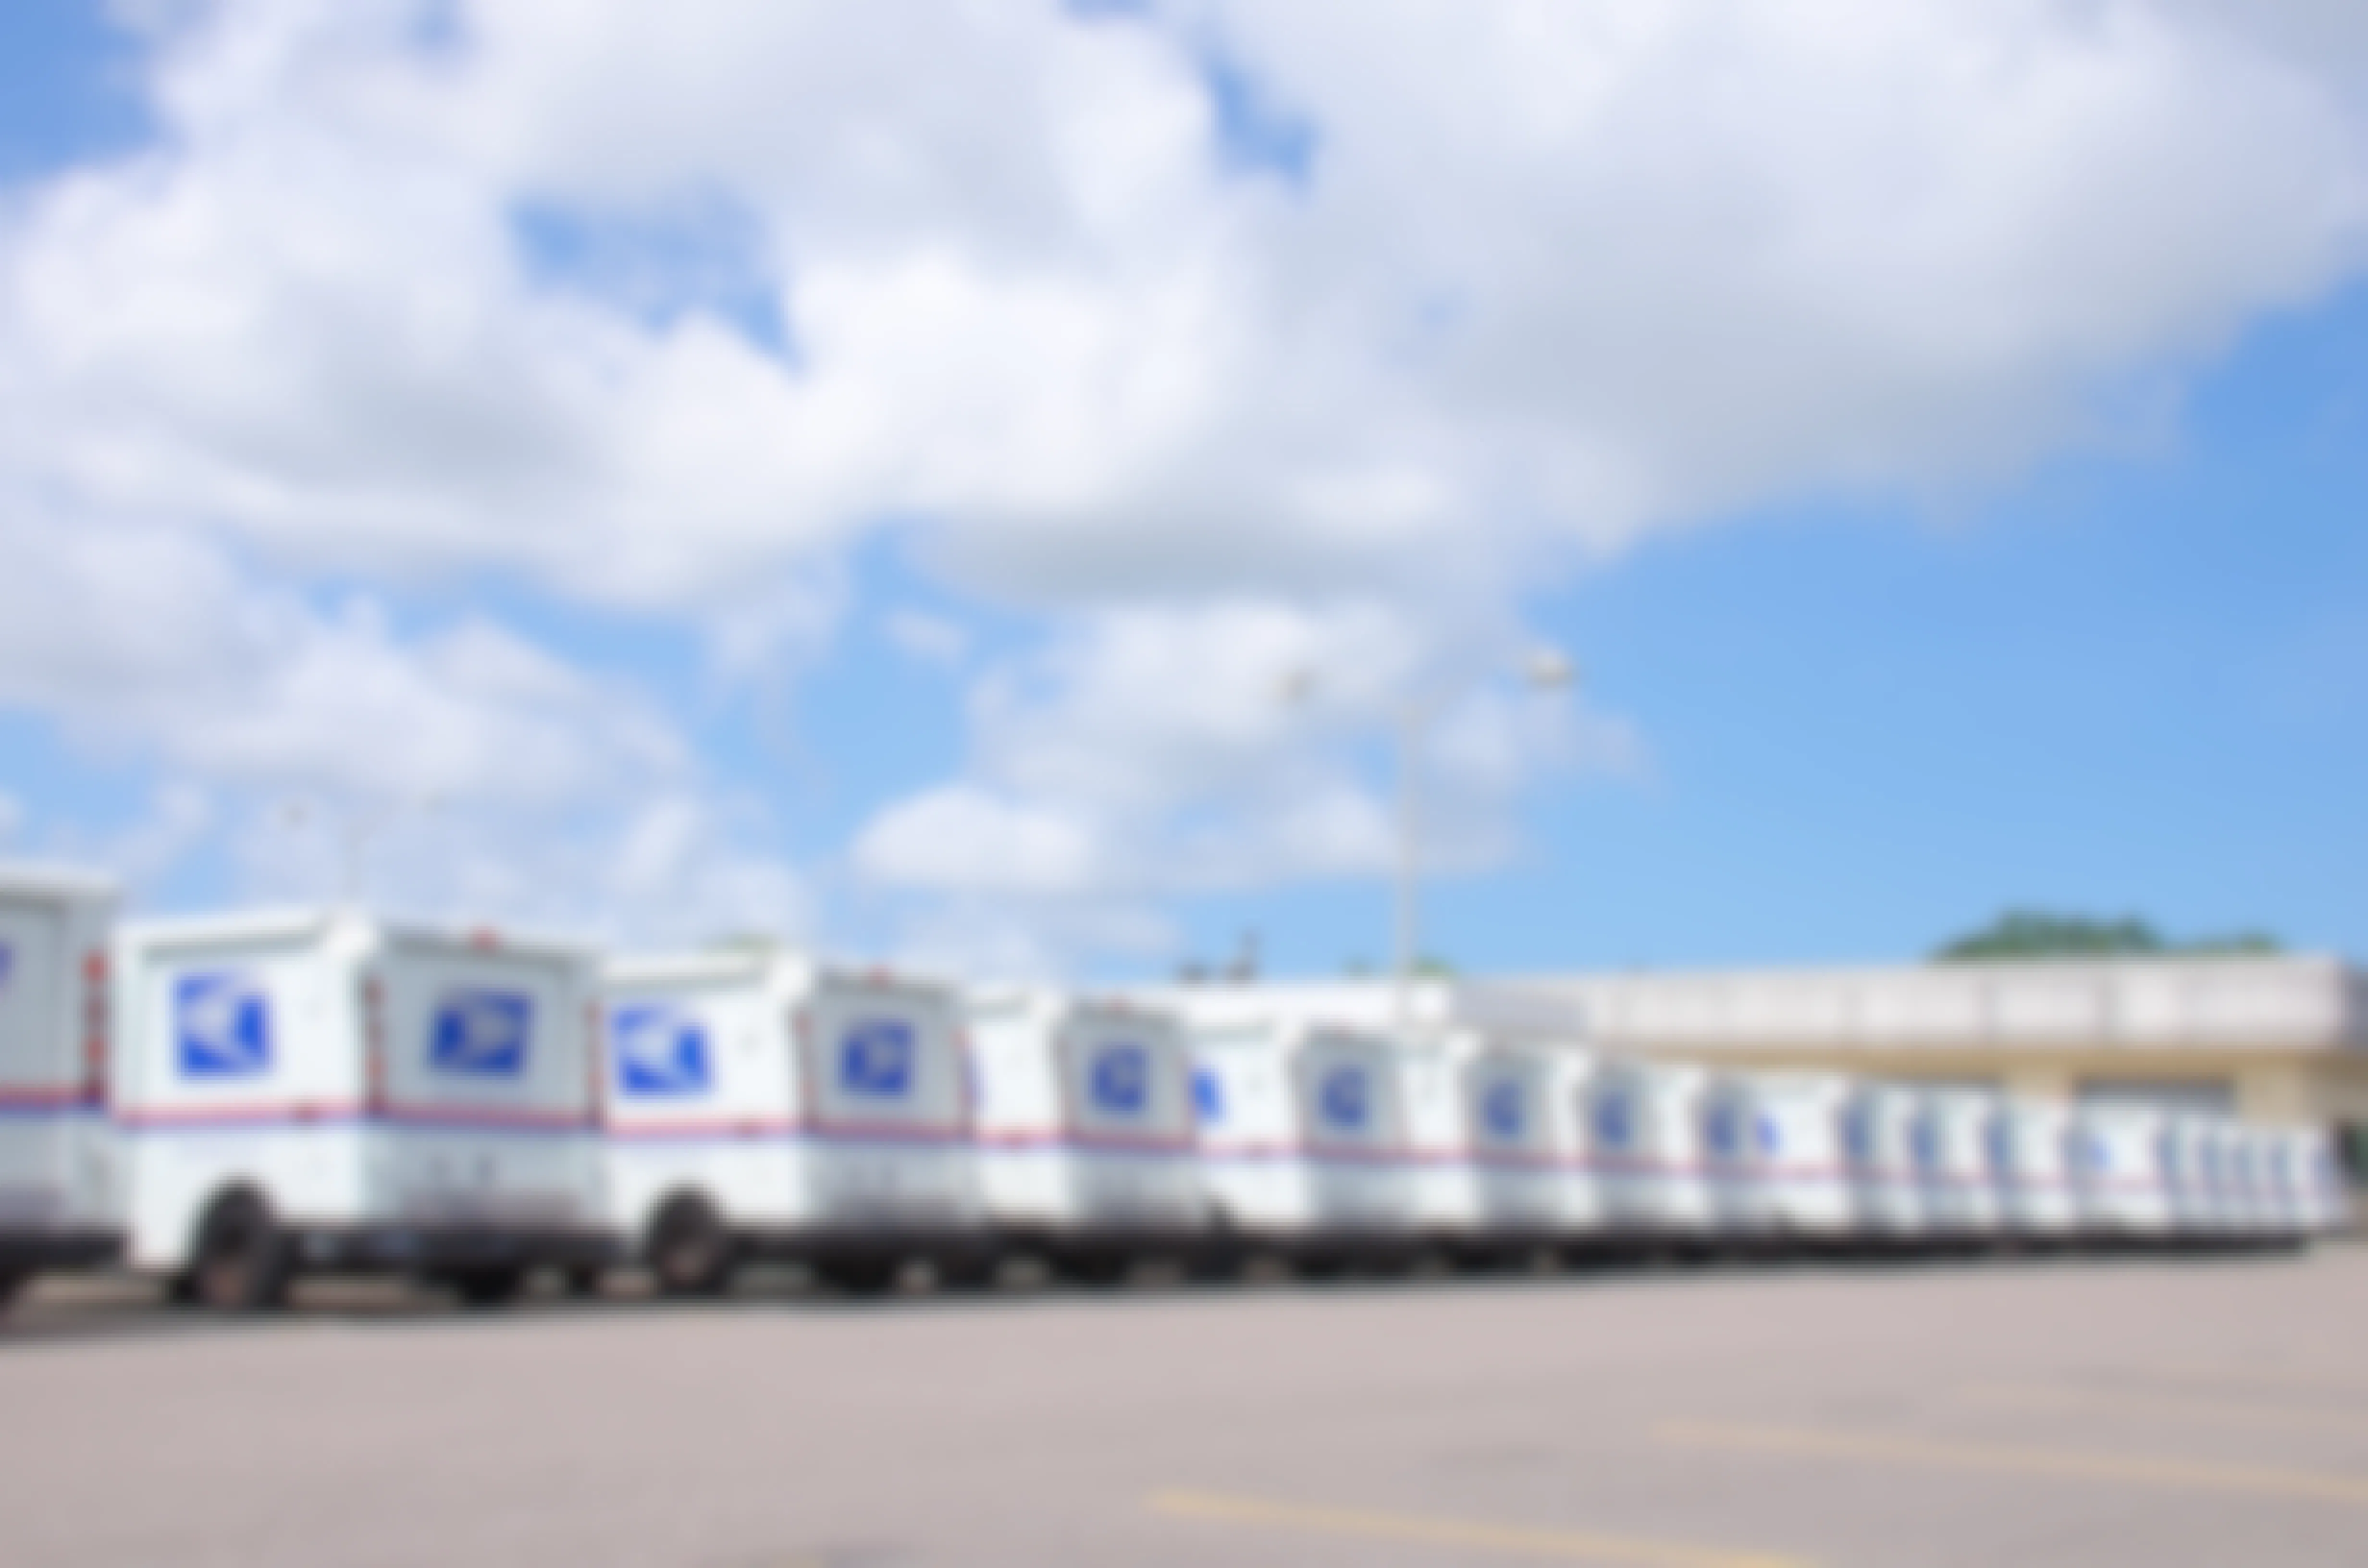 A row of U.S. Postal Service mail trucks in a parking lot.